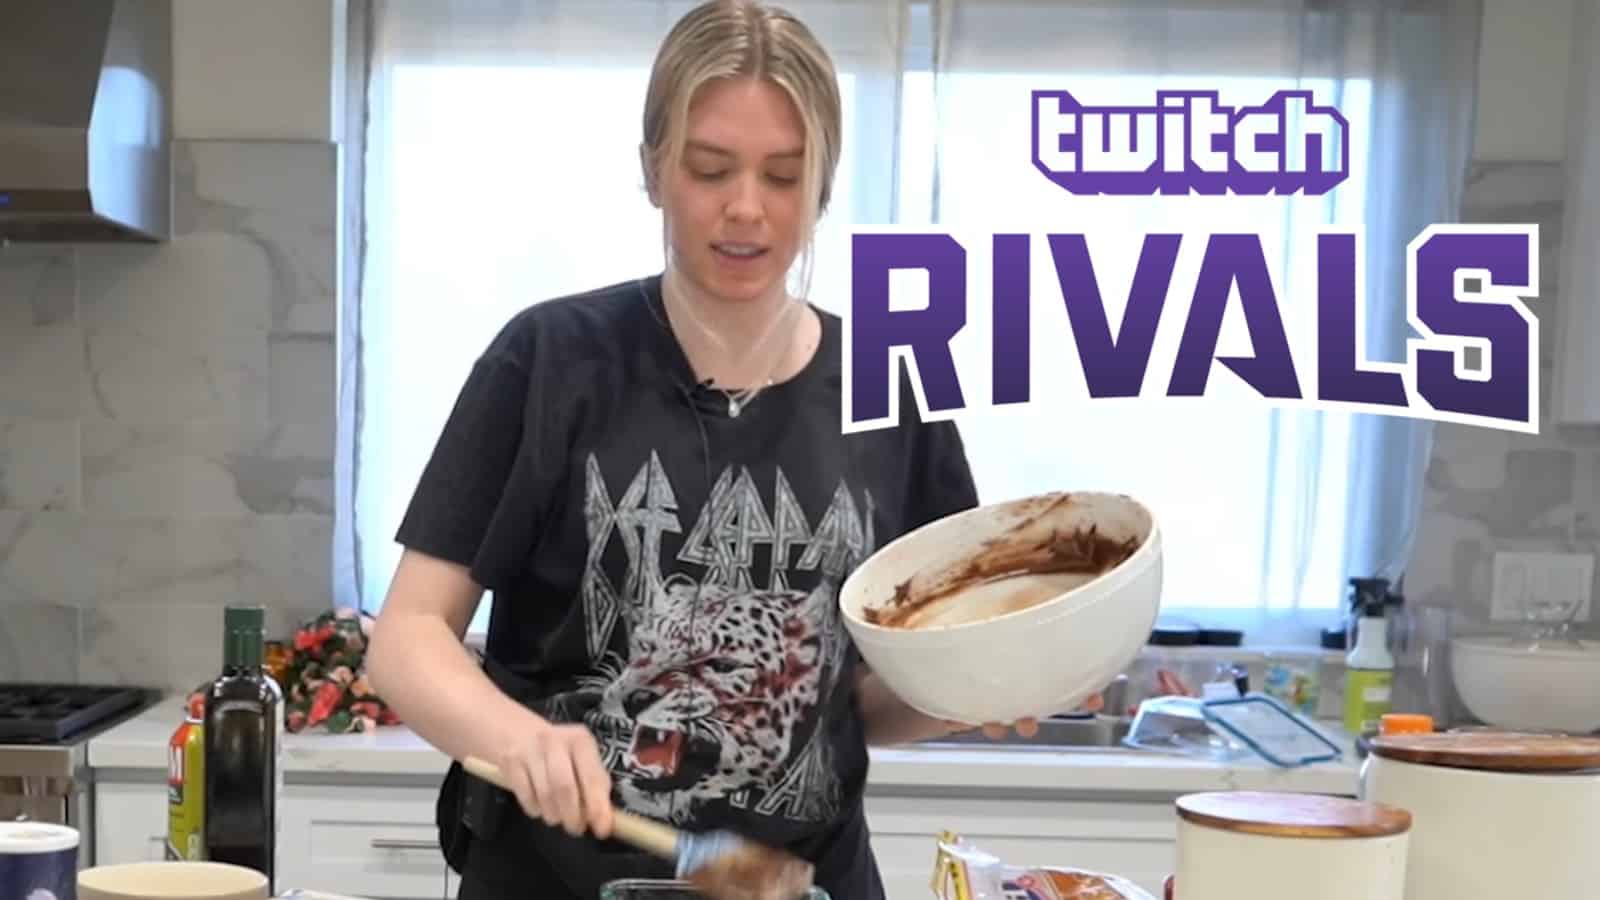 QTCinderella baking with Twitch Rivals logo